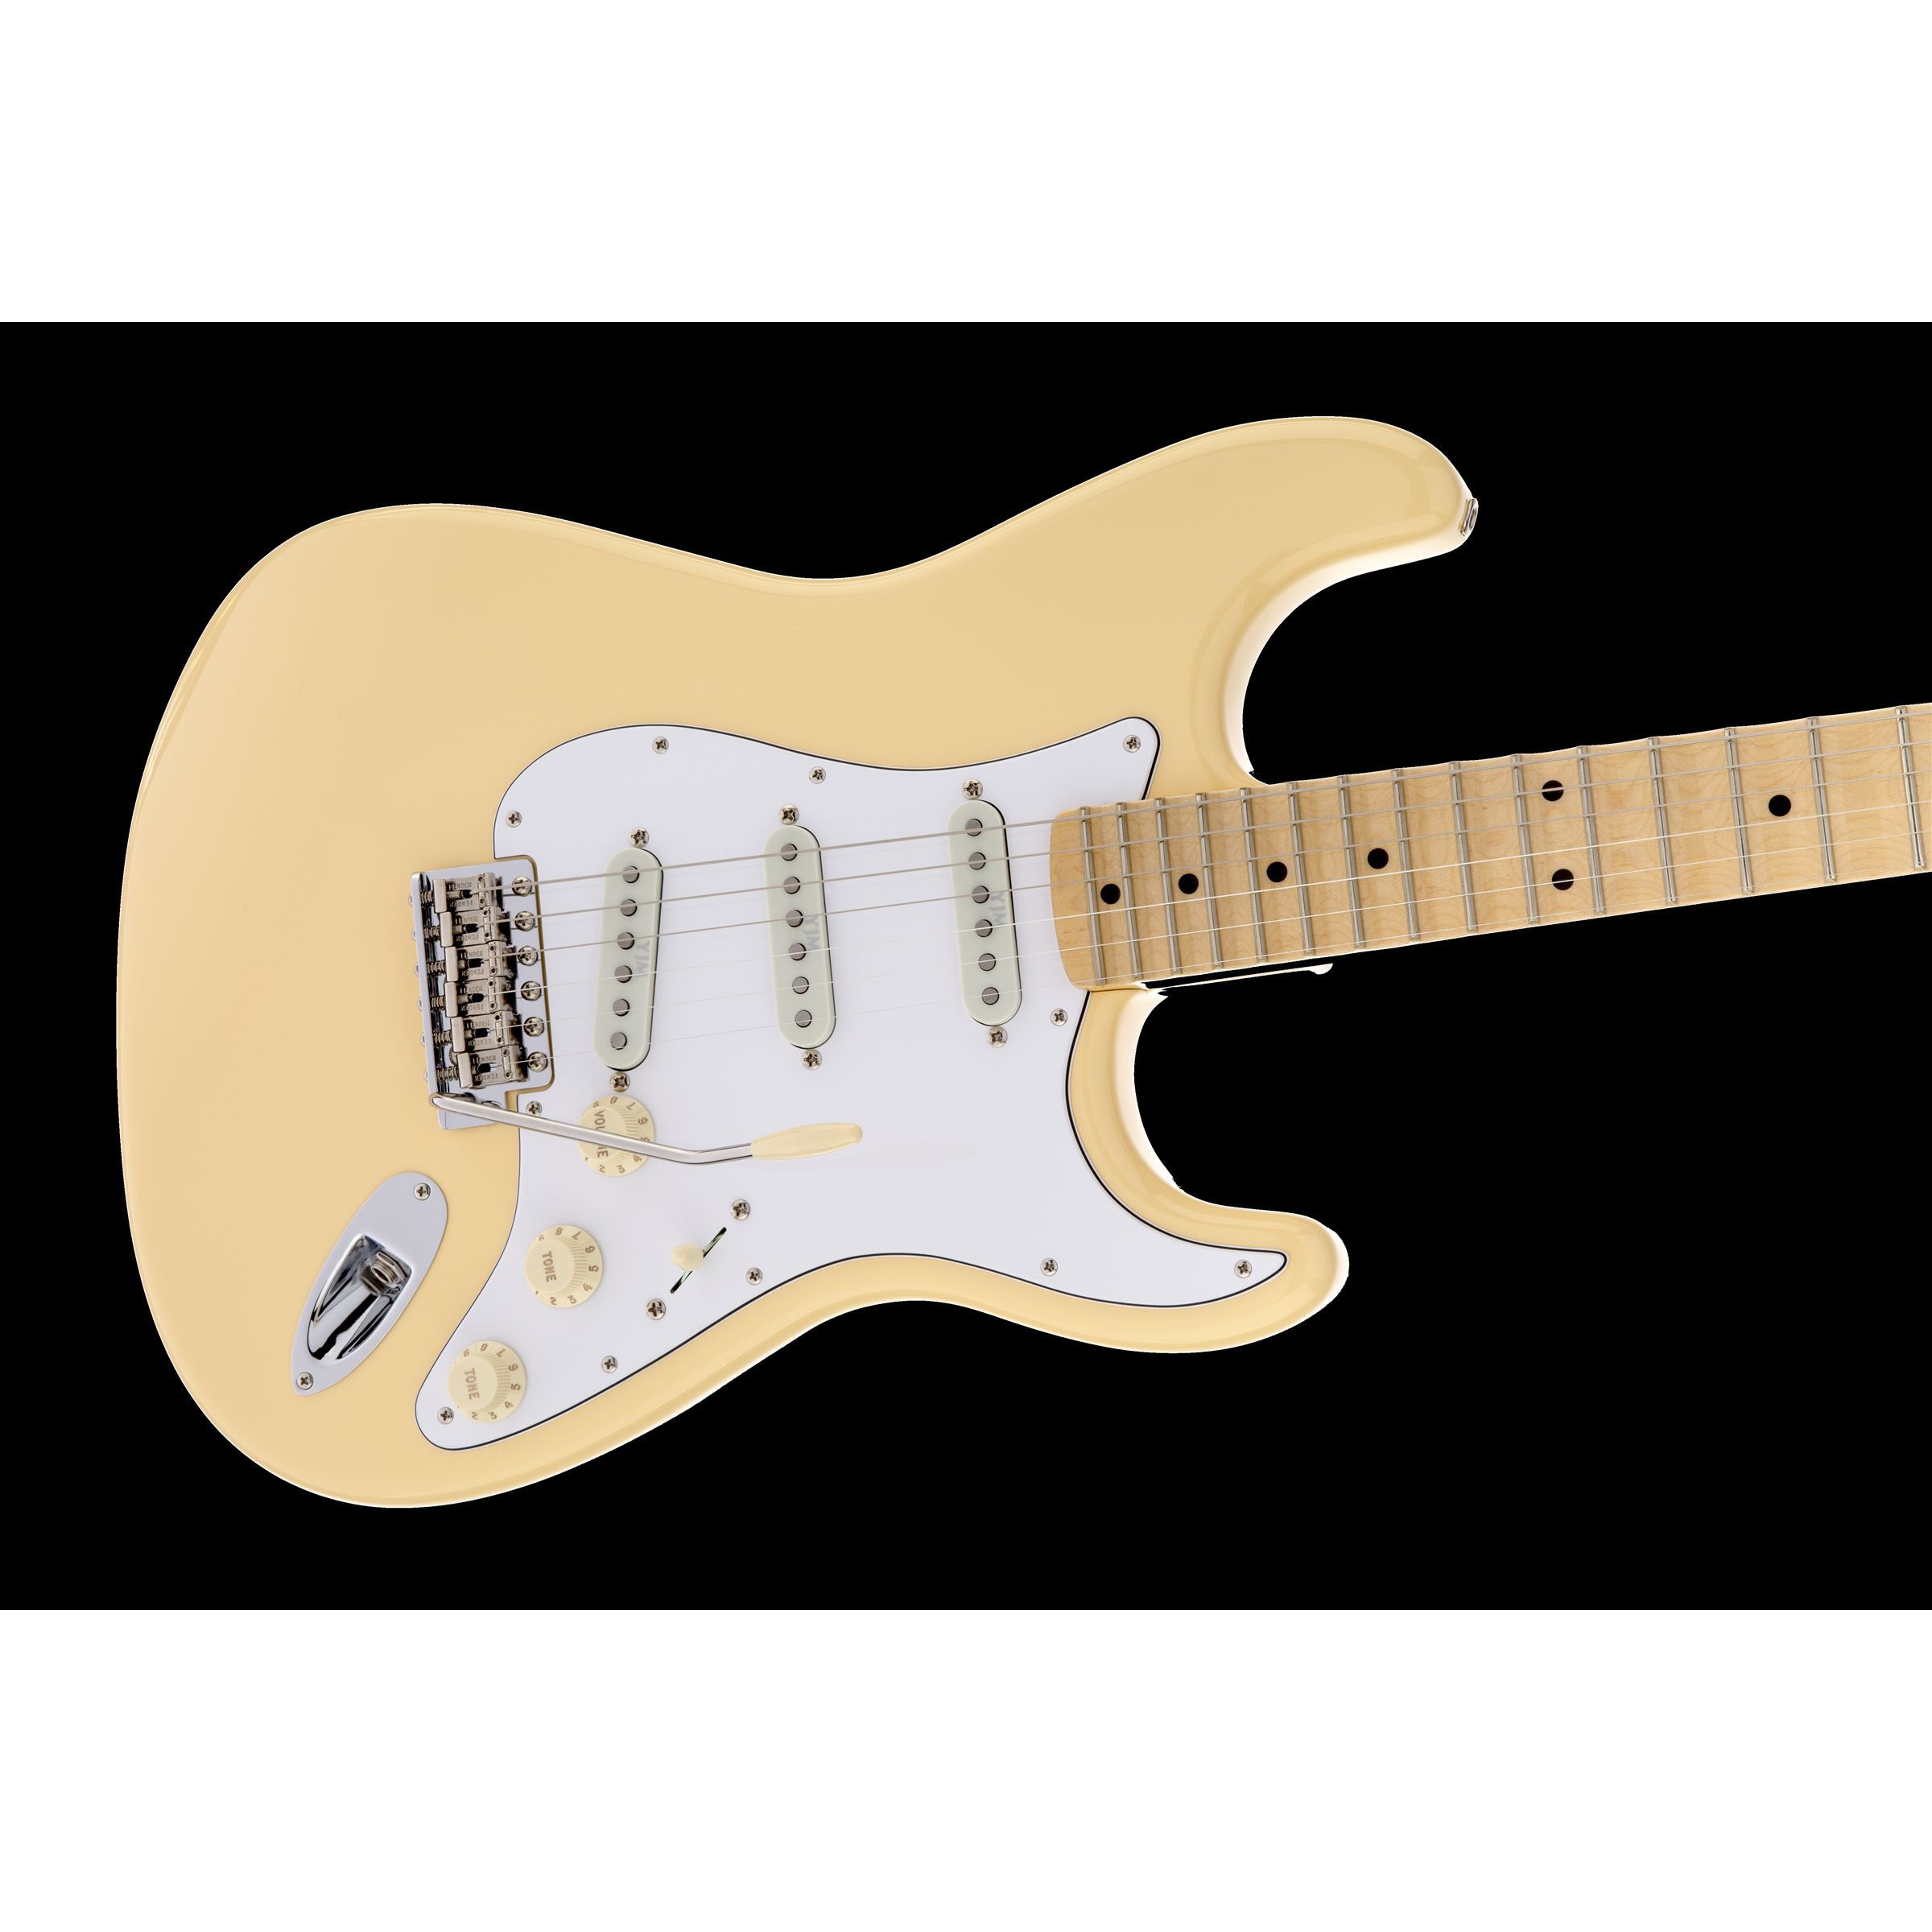 White stratocaster. Электрогитара Fender Yngwie Malmsteen Stratocaster. Fender Stratocaster Мальмстина. Фендер стратокастер Ингви Мальмстин. Fender Vintage White.